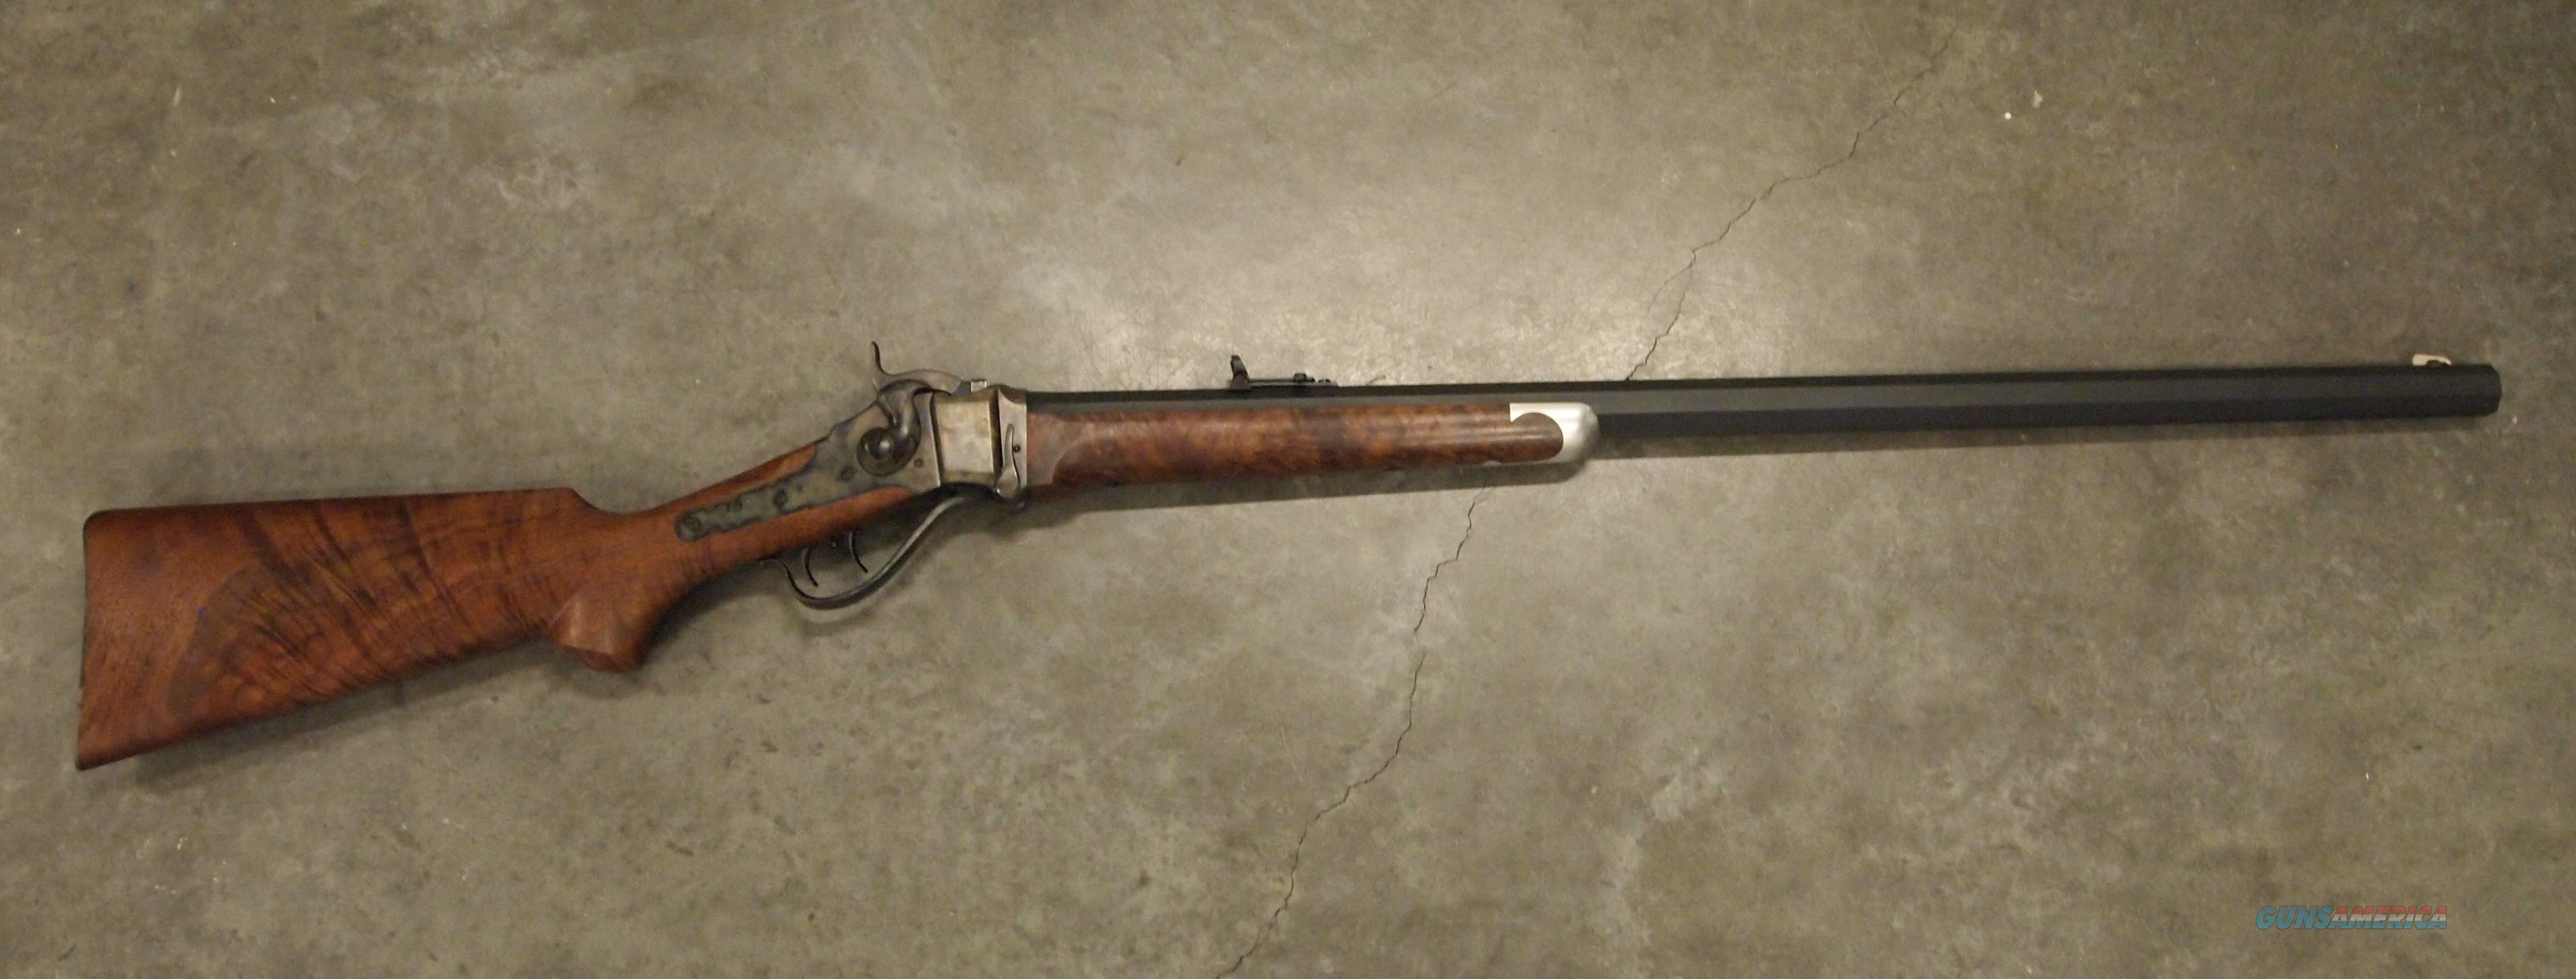 Sharps 1874 Rifle #20